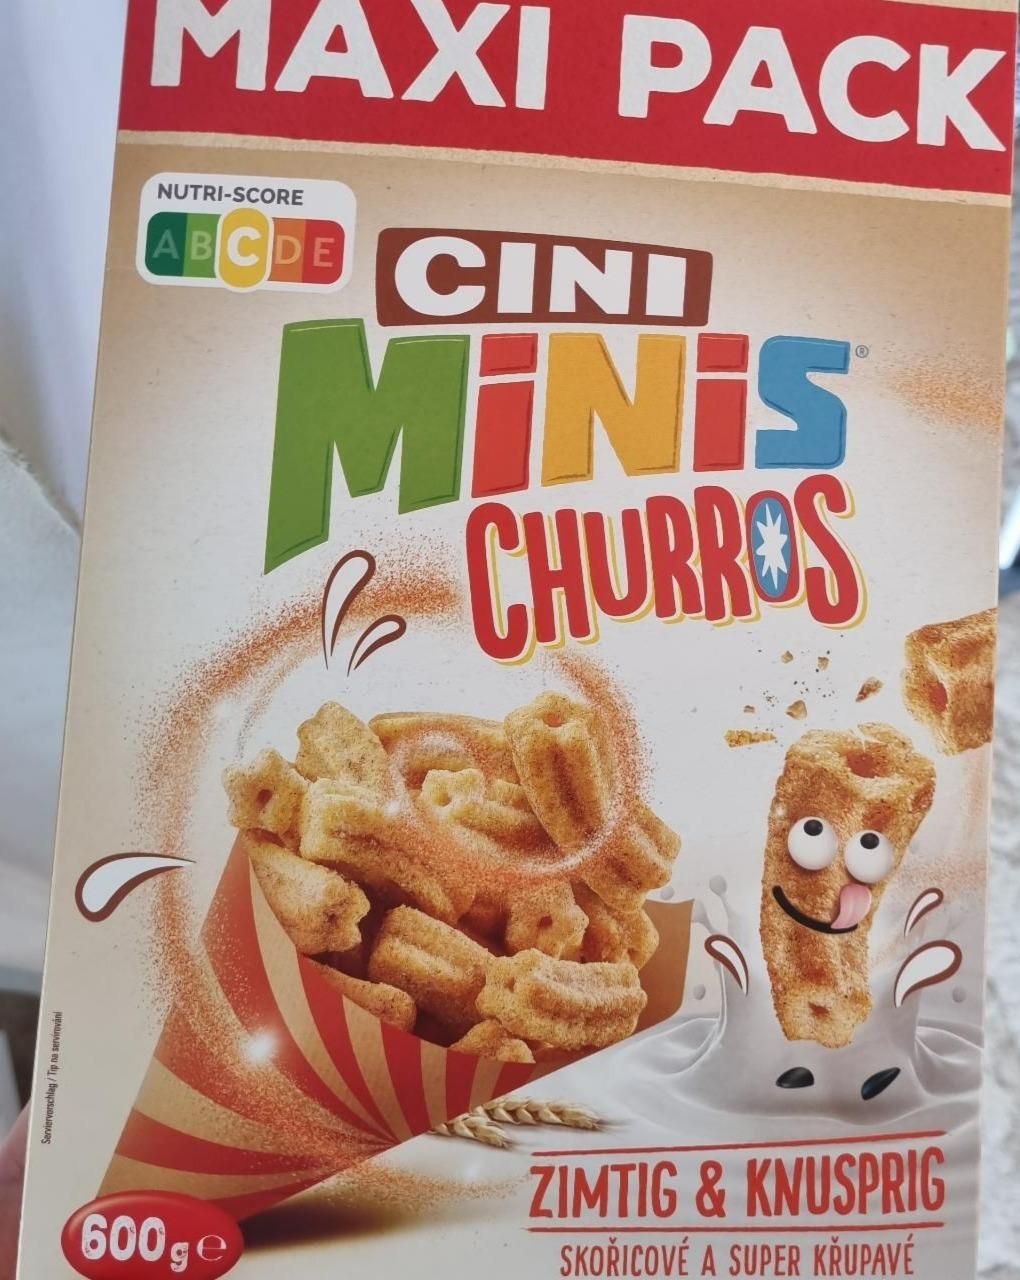 Fotografie - Cini minis Churros Nestlé